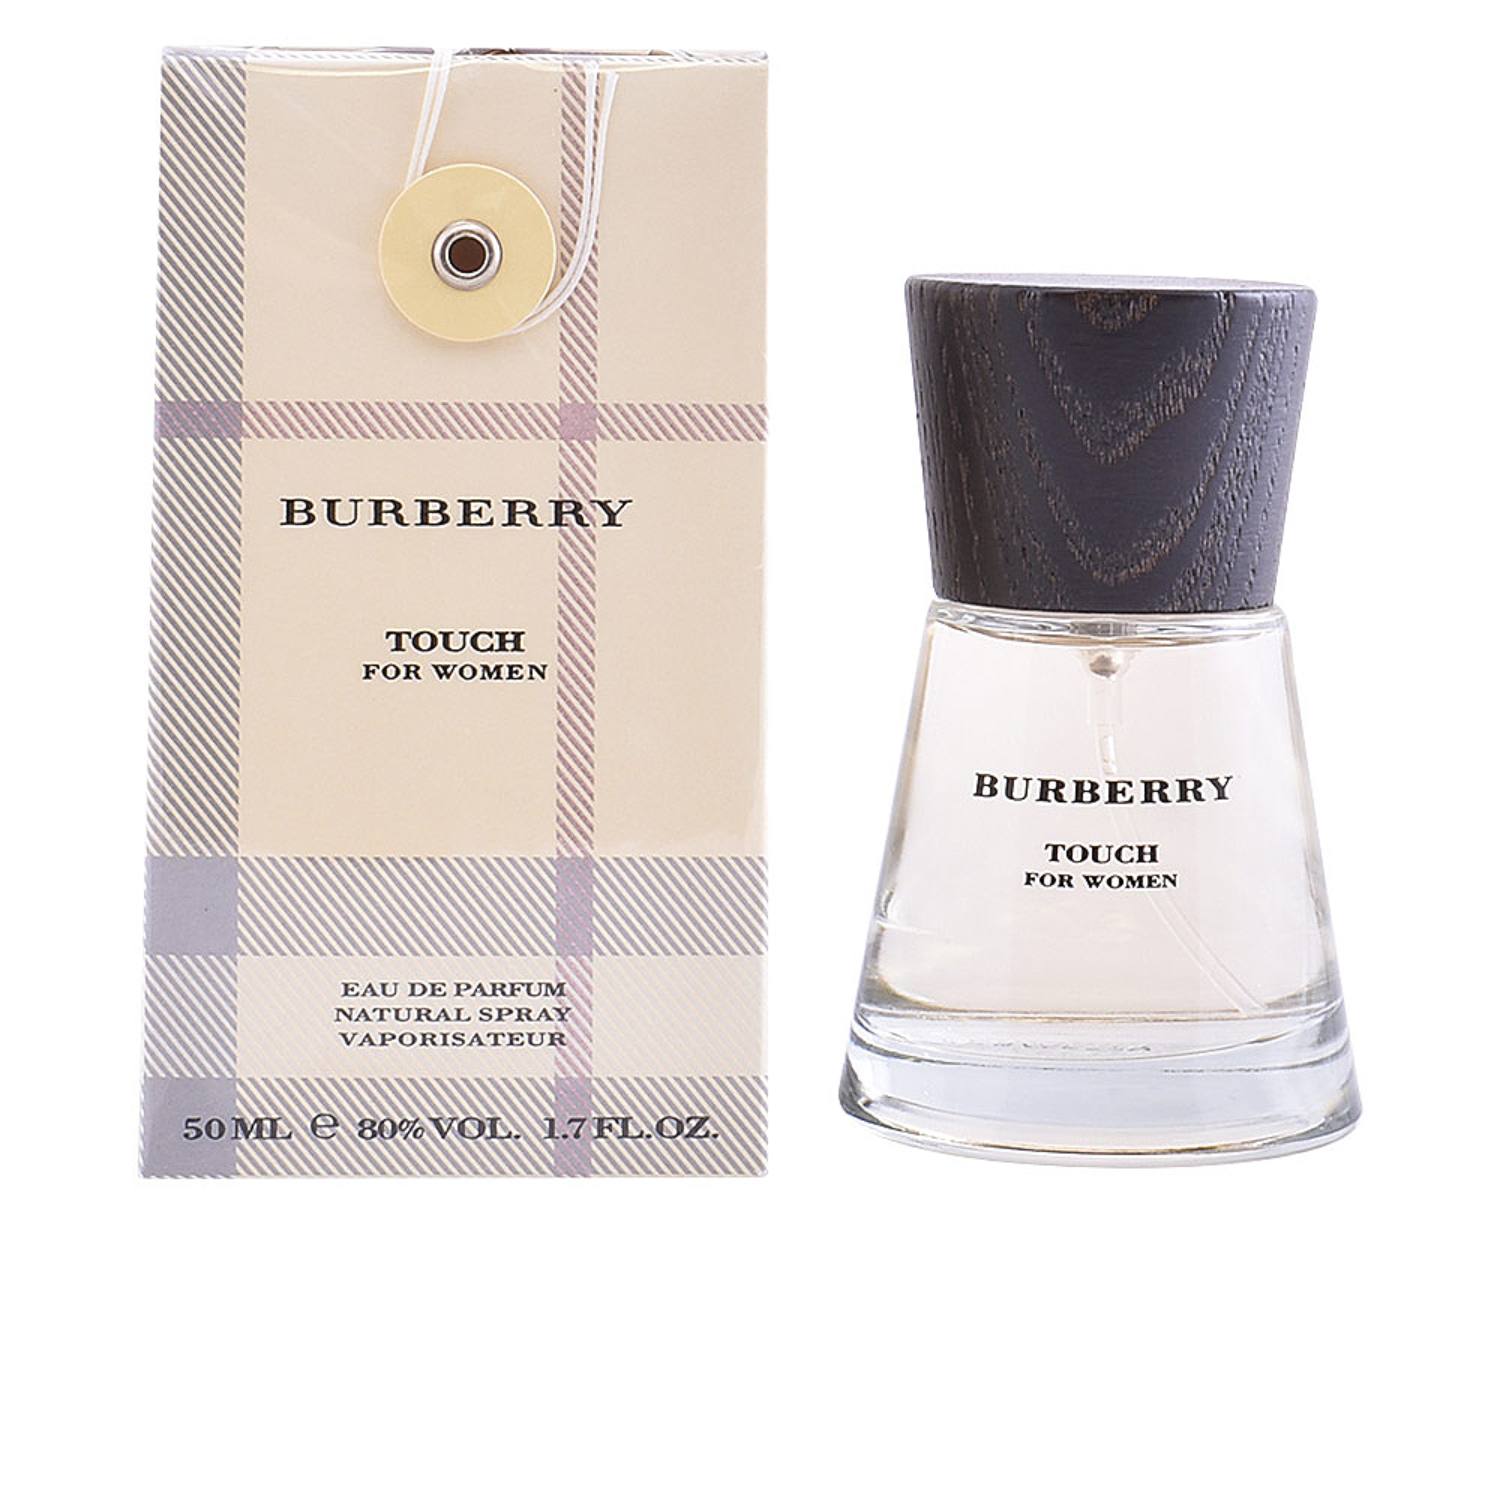 BURBERRY  TOUCH FOR WOMEN  eau de Parfum Spray